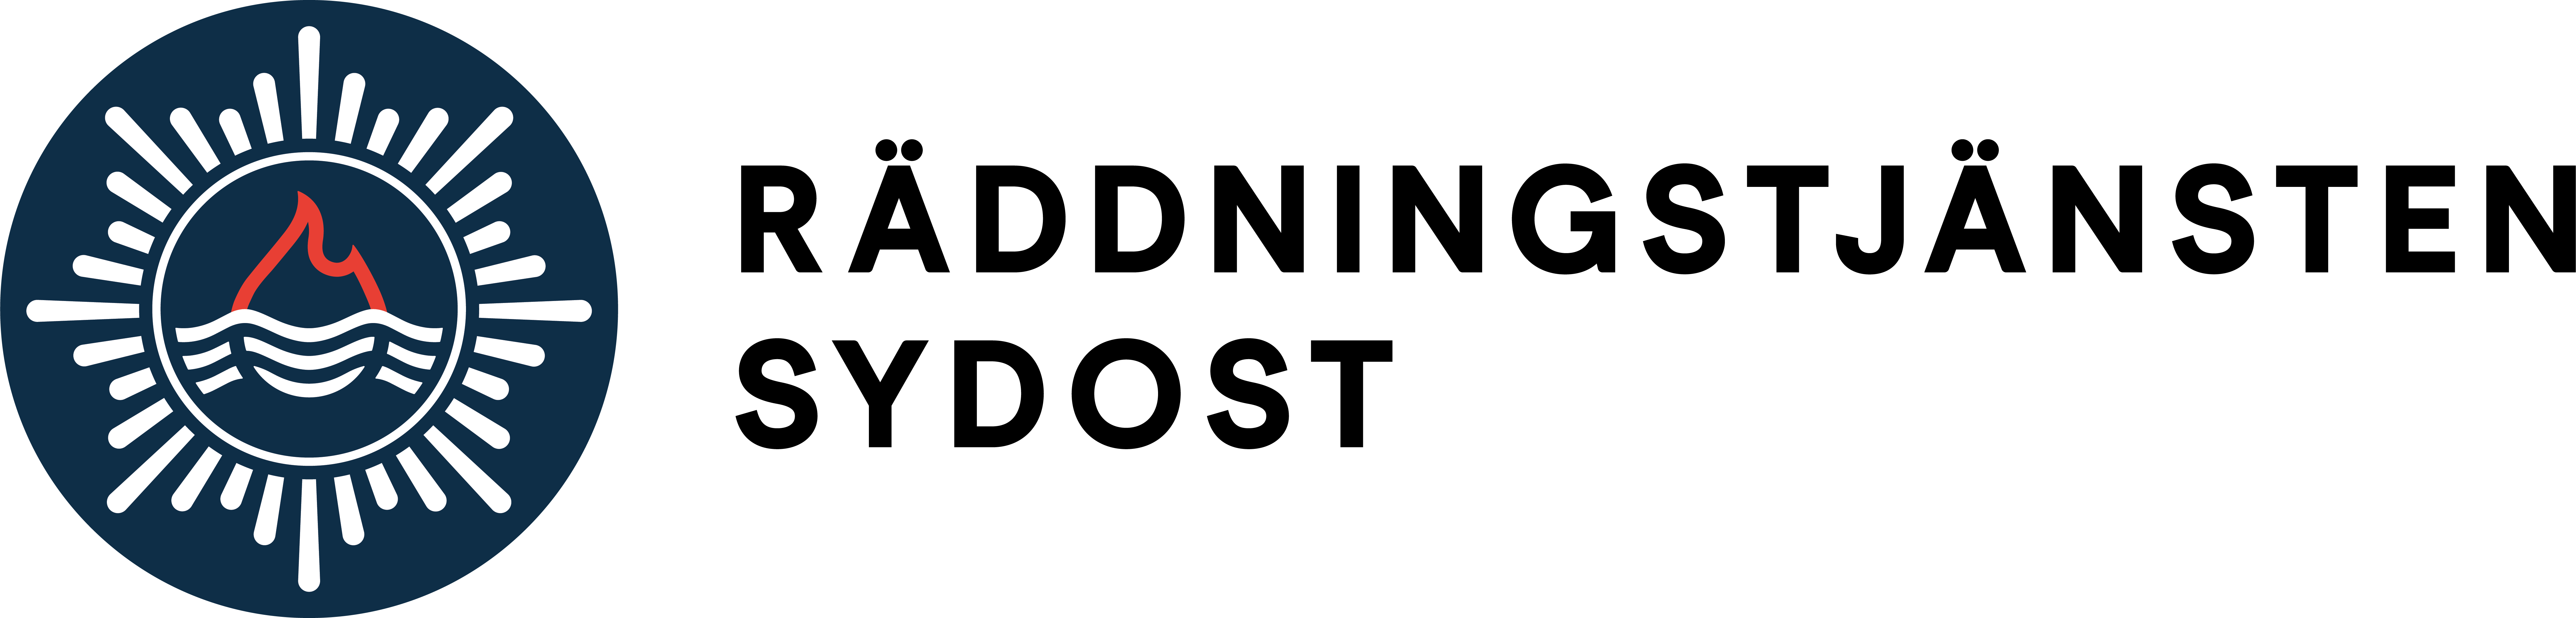 Logo Kalmar